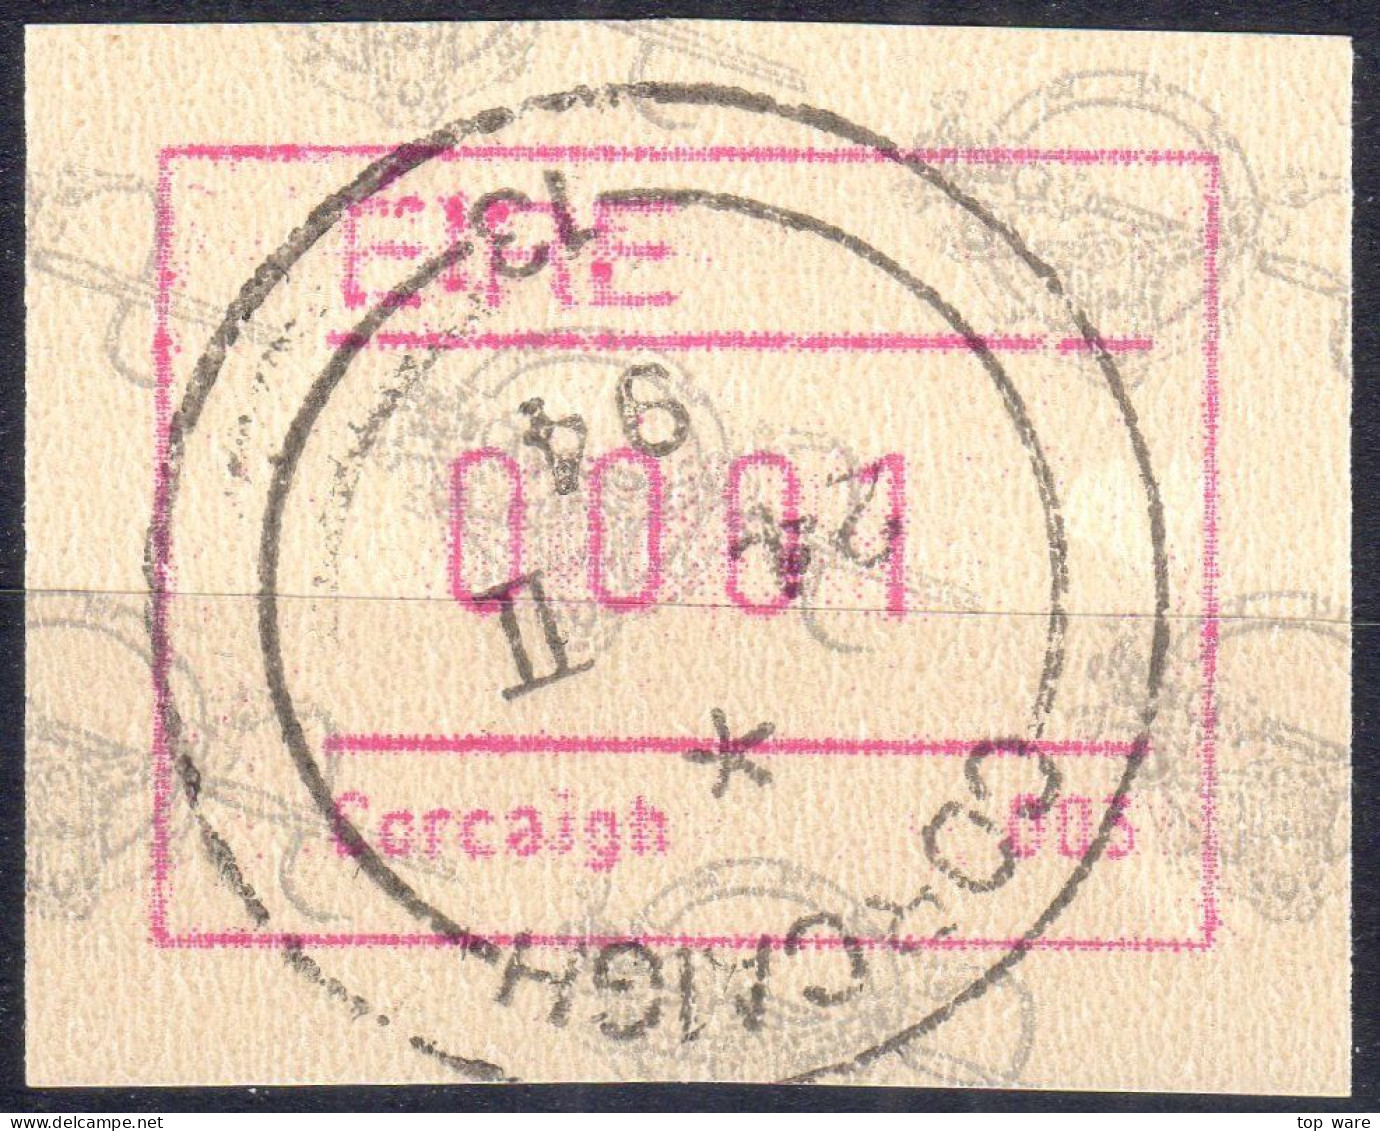 EIRE IRELAND ATM STAMPS Michel 4.3.2 Cork Corcaigh 003 CTO. 24 II 94 Frama Automatenmarken Etiquetas - Frankeervignetten (Frama)